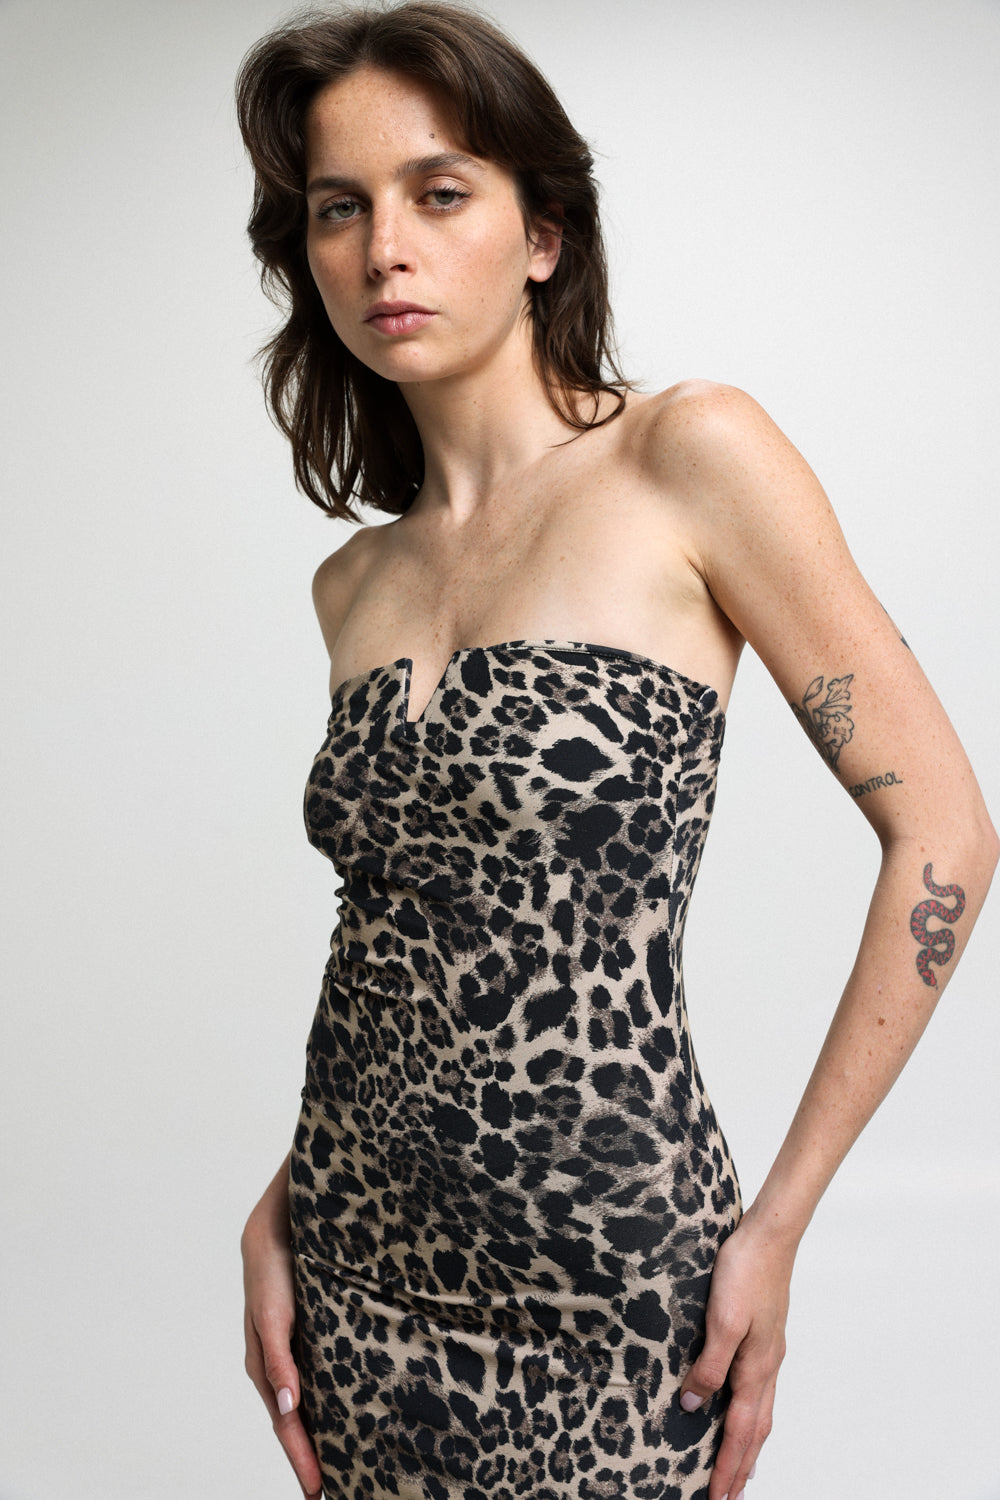 Fantasy Leopard Dress